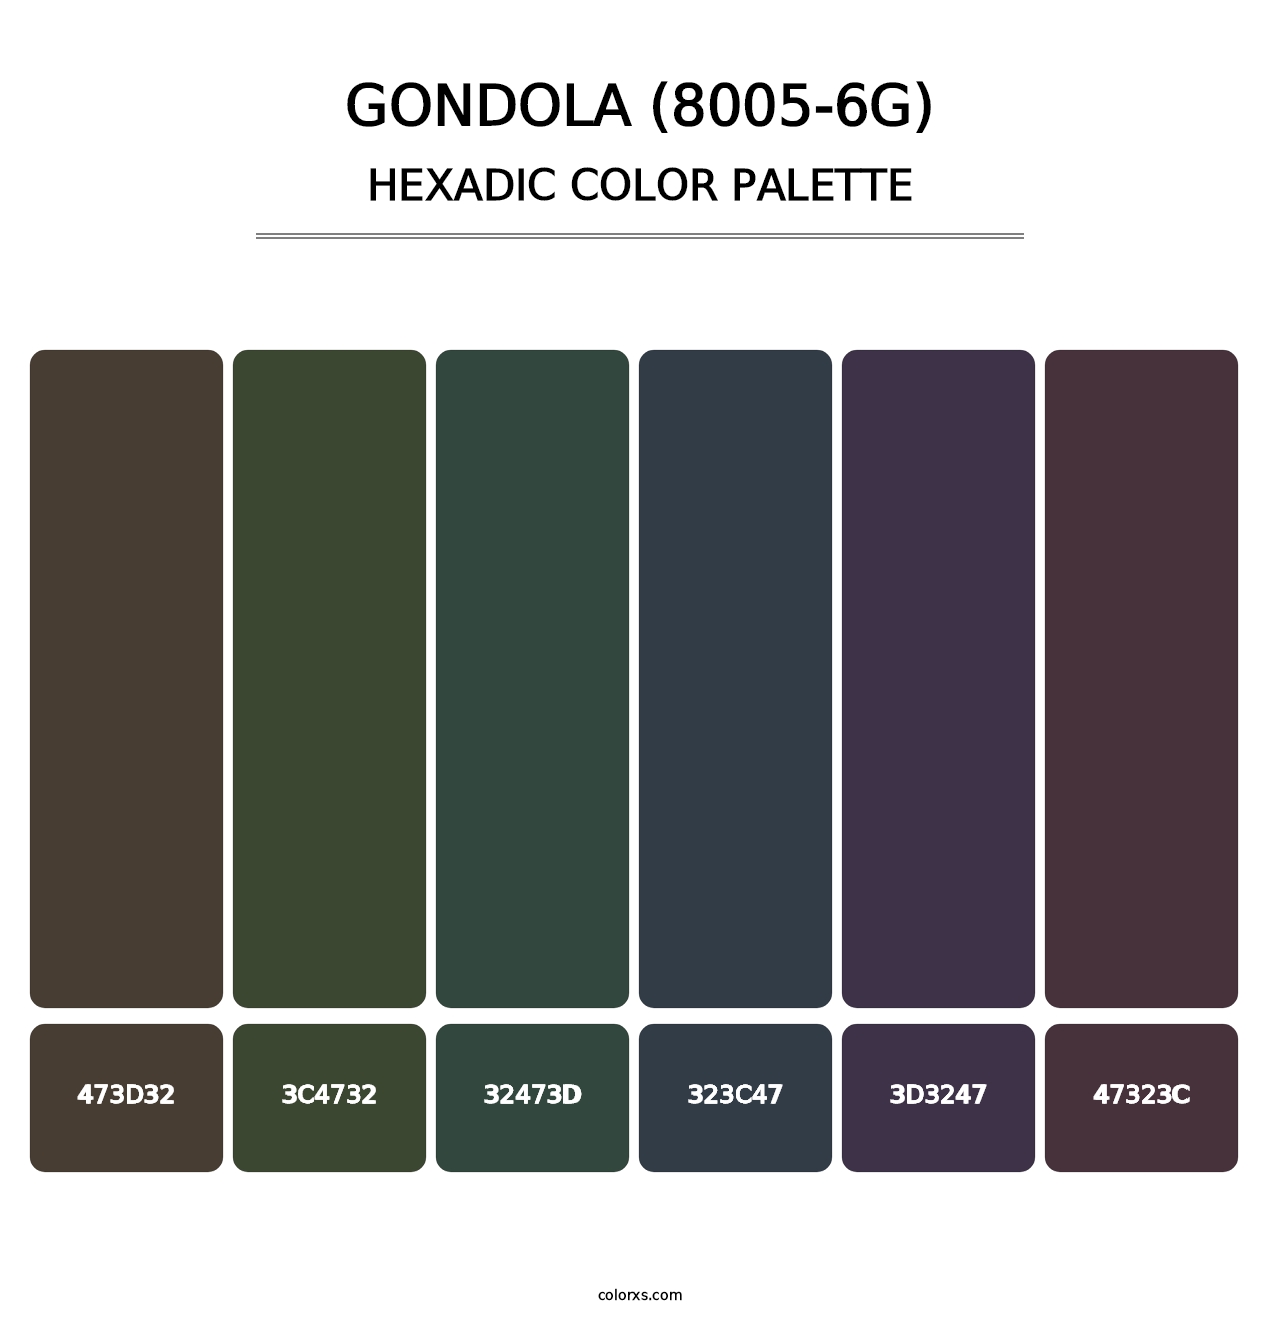 Gondola (8005-6G) - Hexadic Color Palette